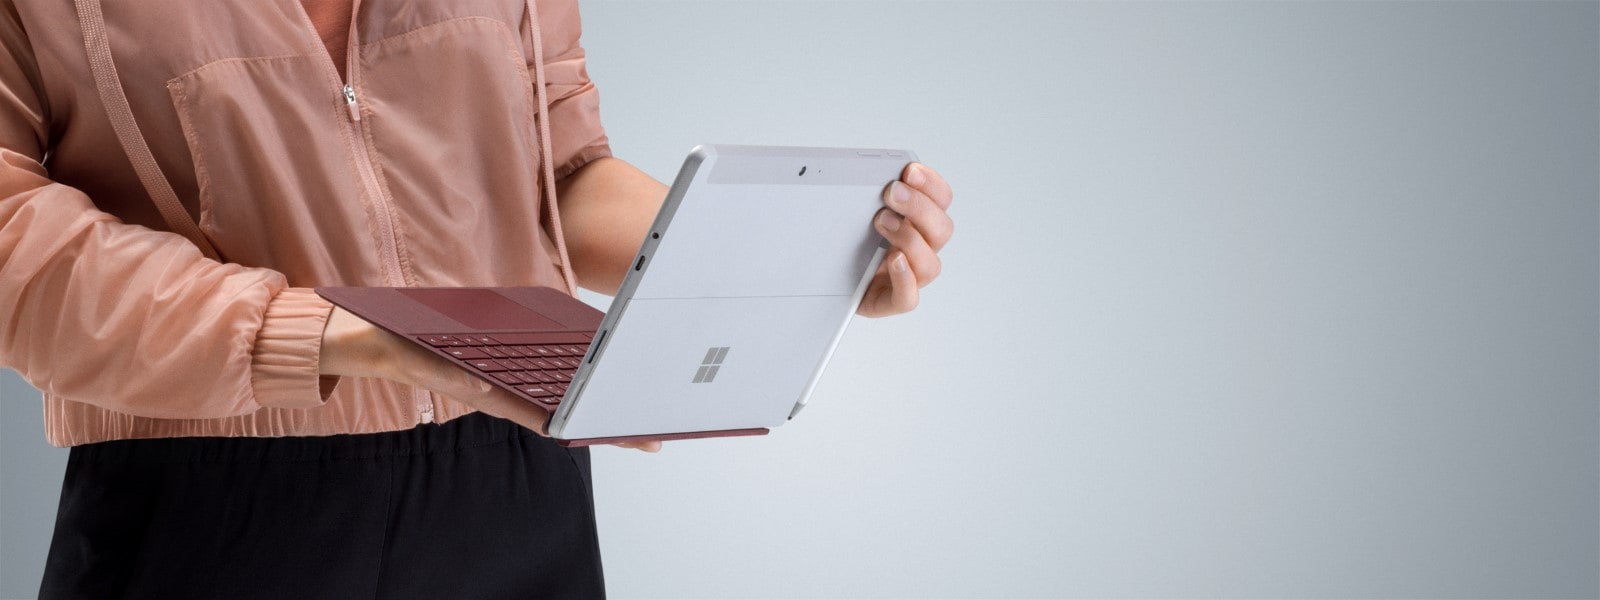 Microsoft Surface Go Is a Versatile Budget Laptop